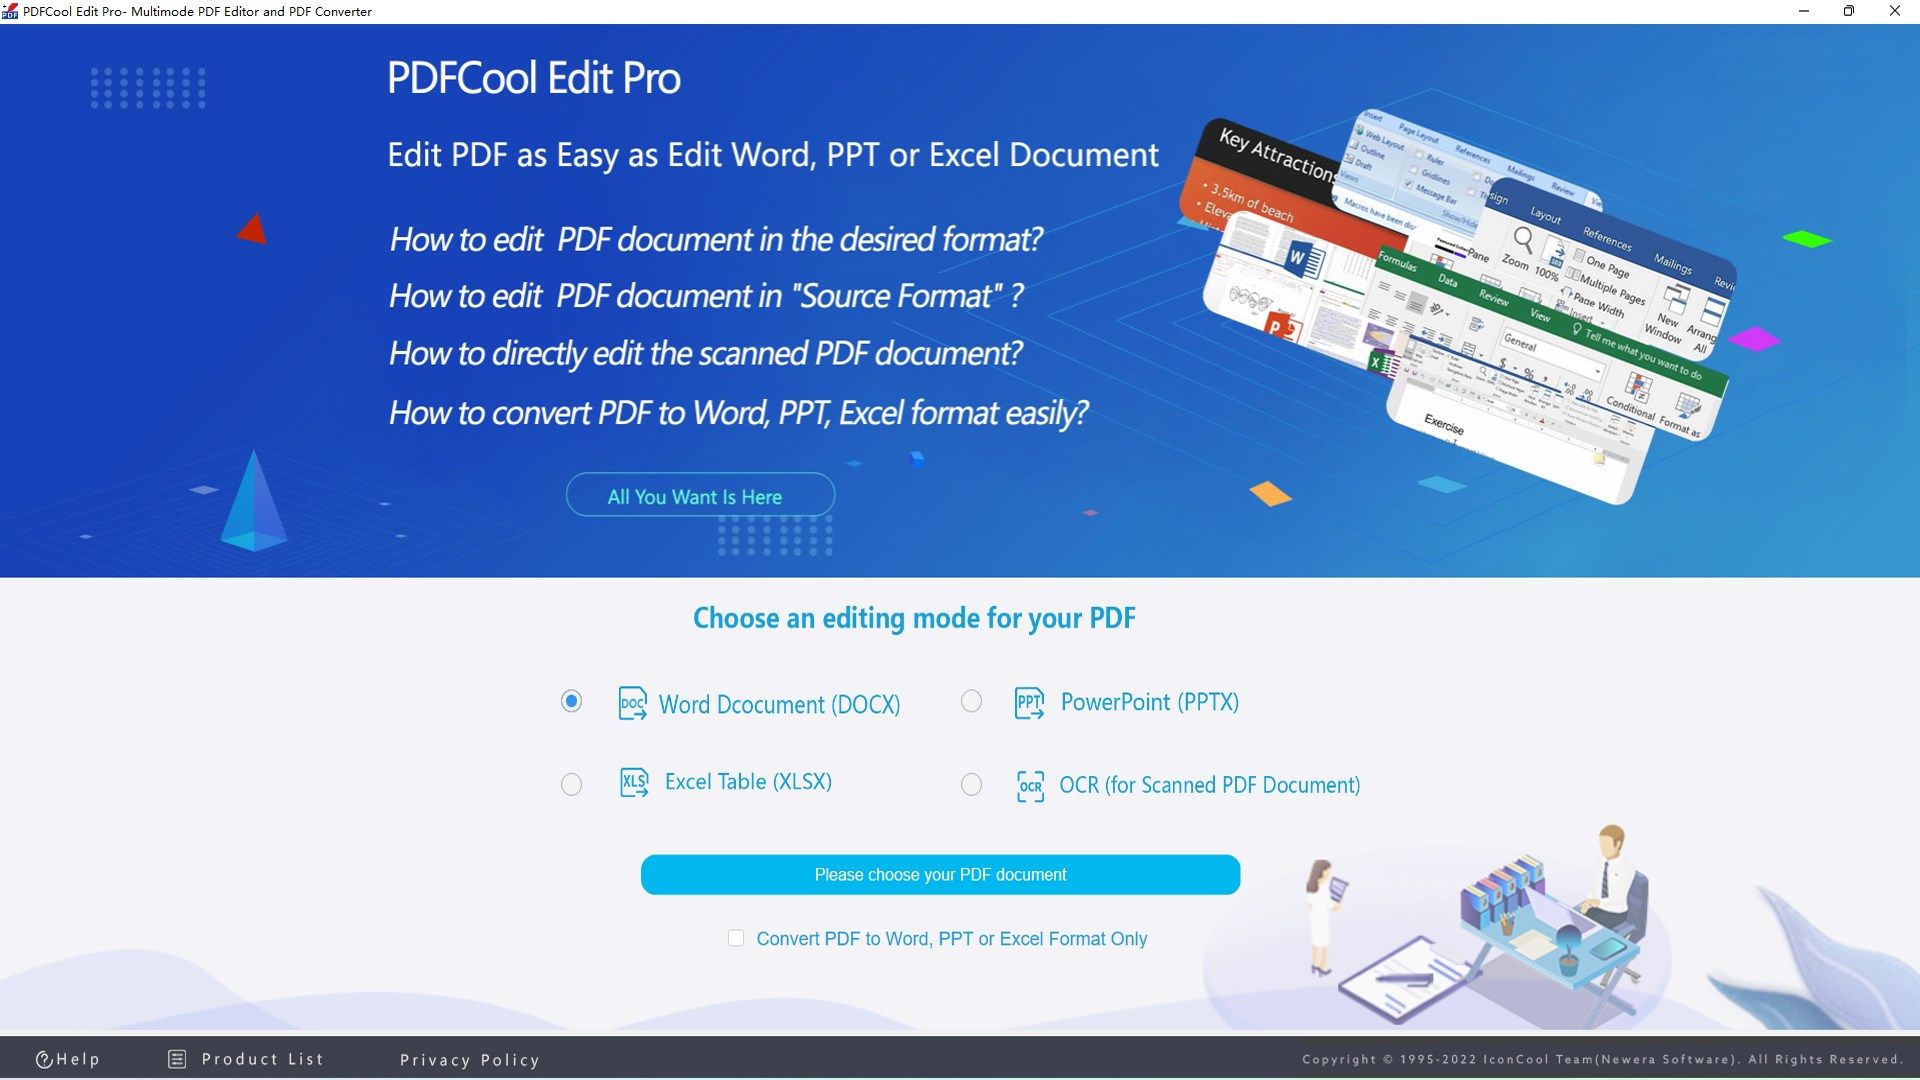 PDFCool Edit Pro - Multimode PDF Editor and PDF Converter